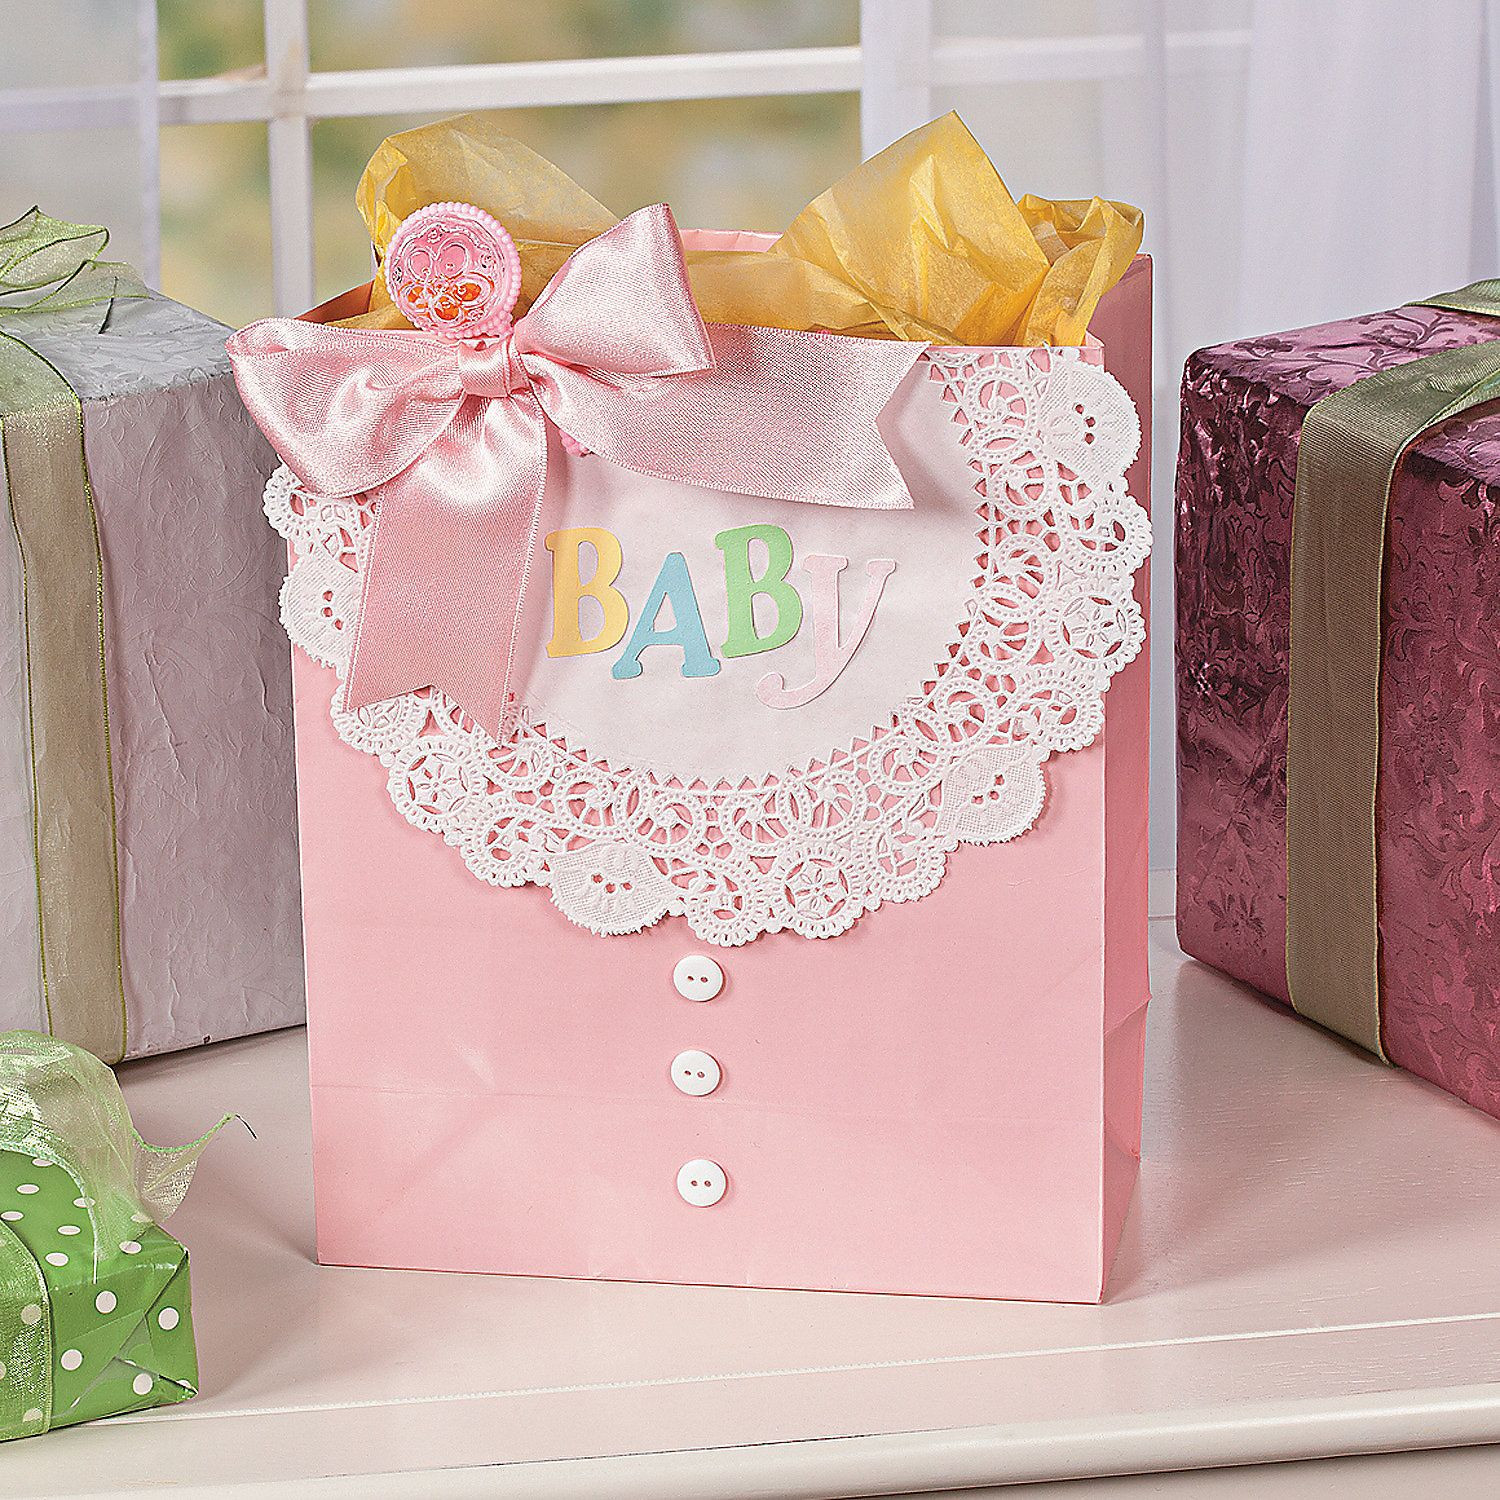 Gift Bag Ideas For Baby Shower
 Baby Gift Bag OrientalTrading